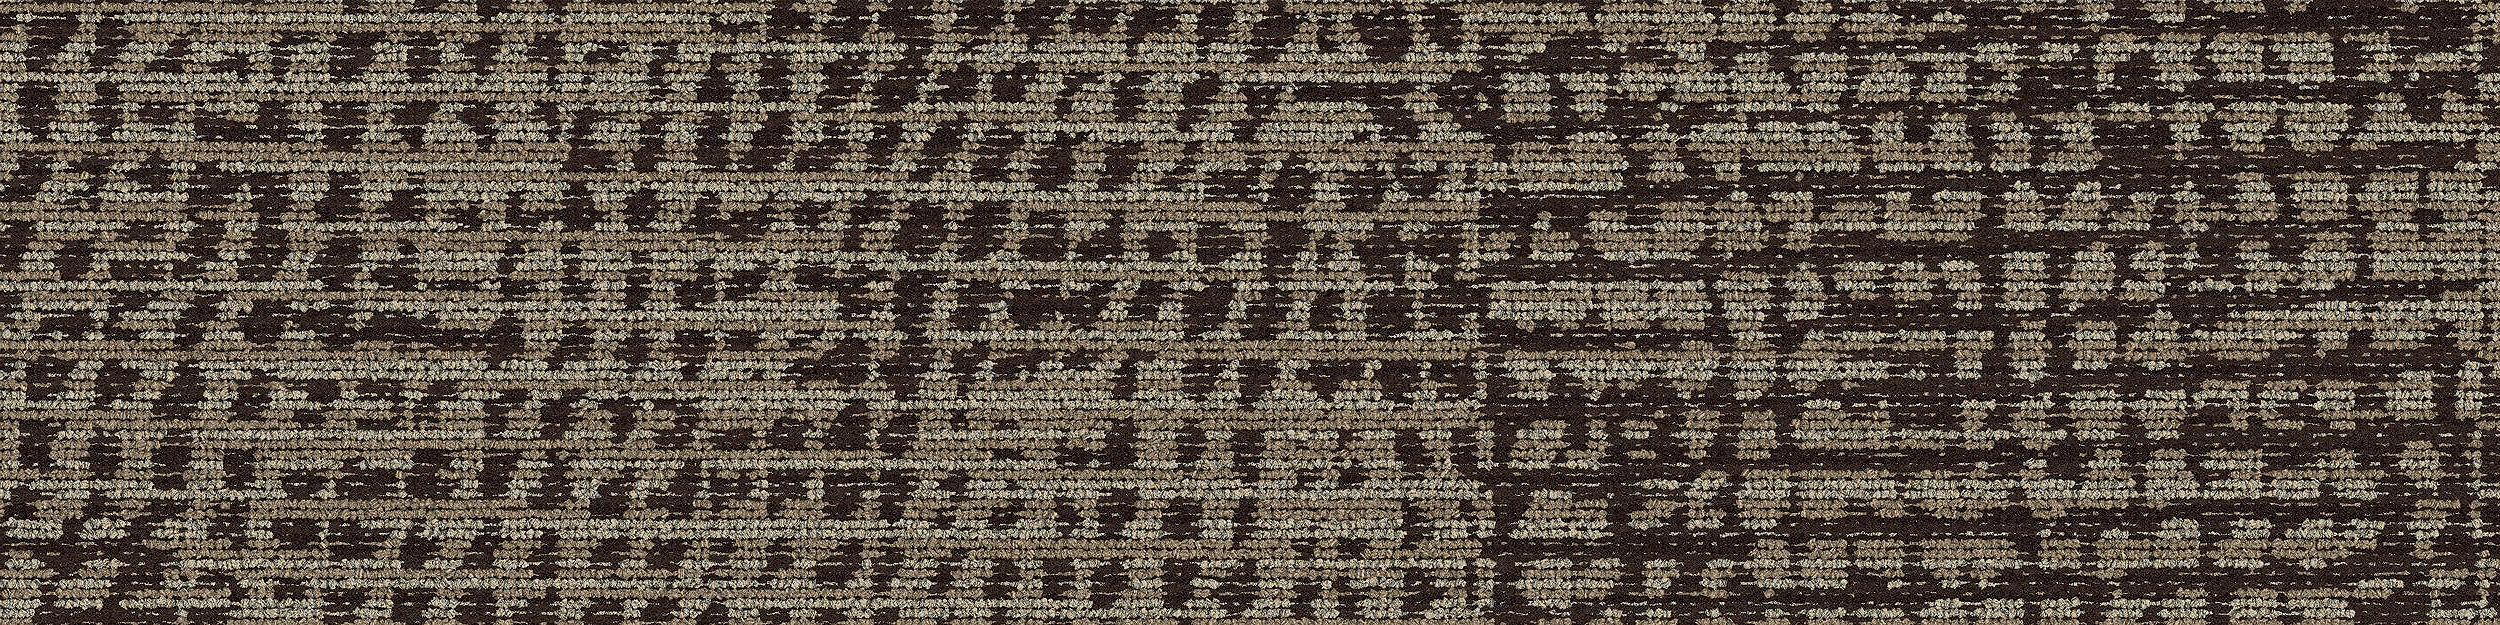 GN160 Carpet Tile In Mushroom imagen número 2